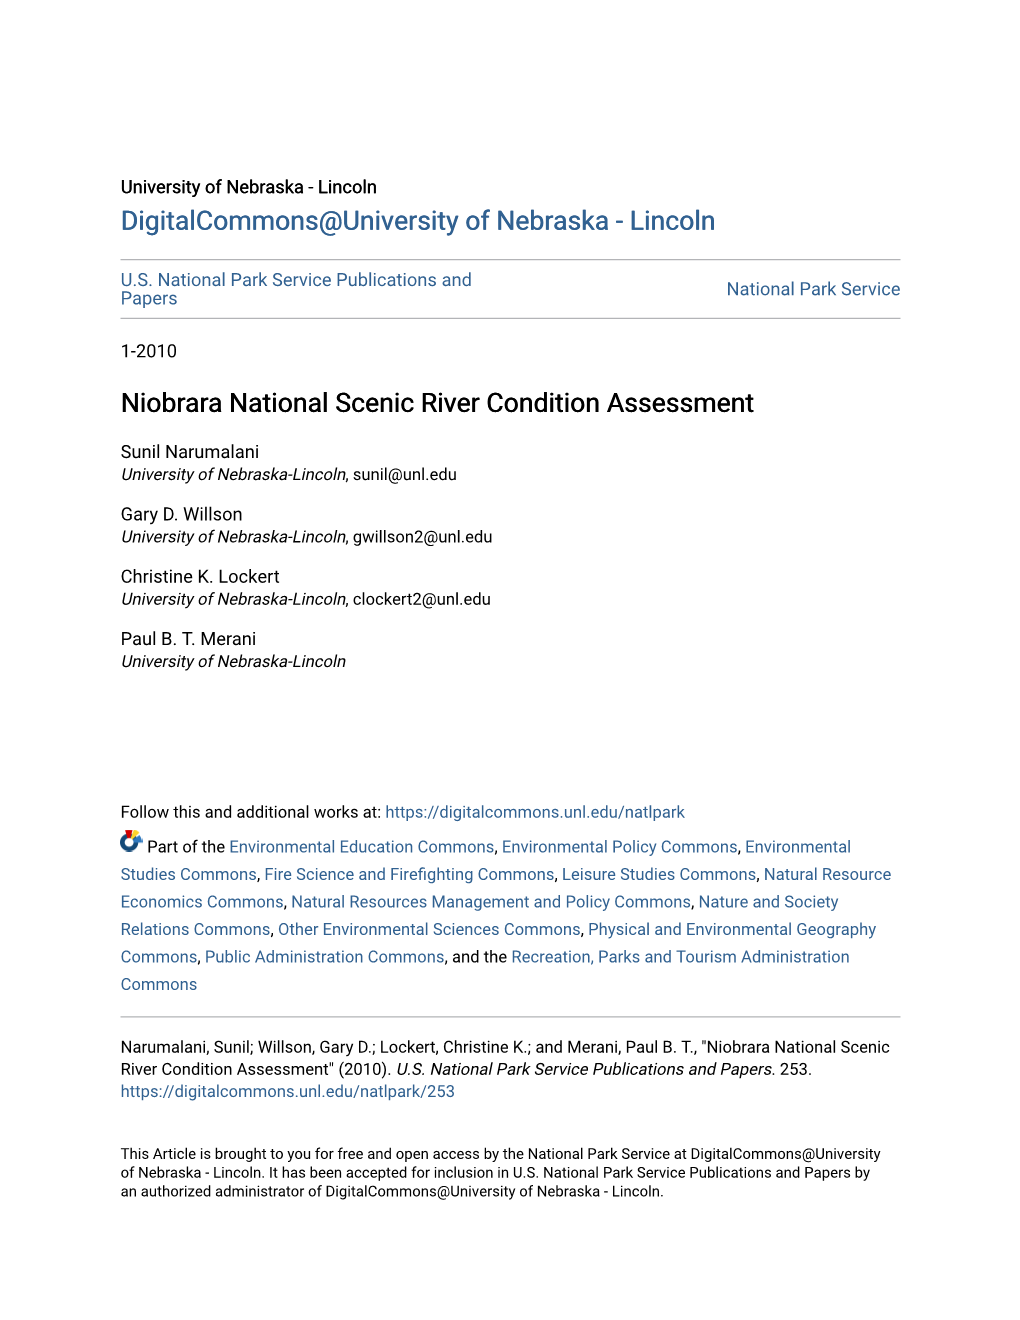 Niobrara National Scenic River Condition Assessment